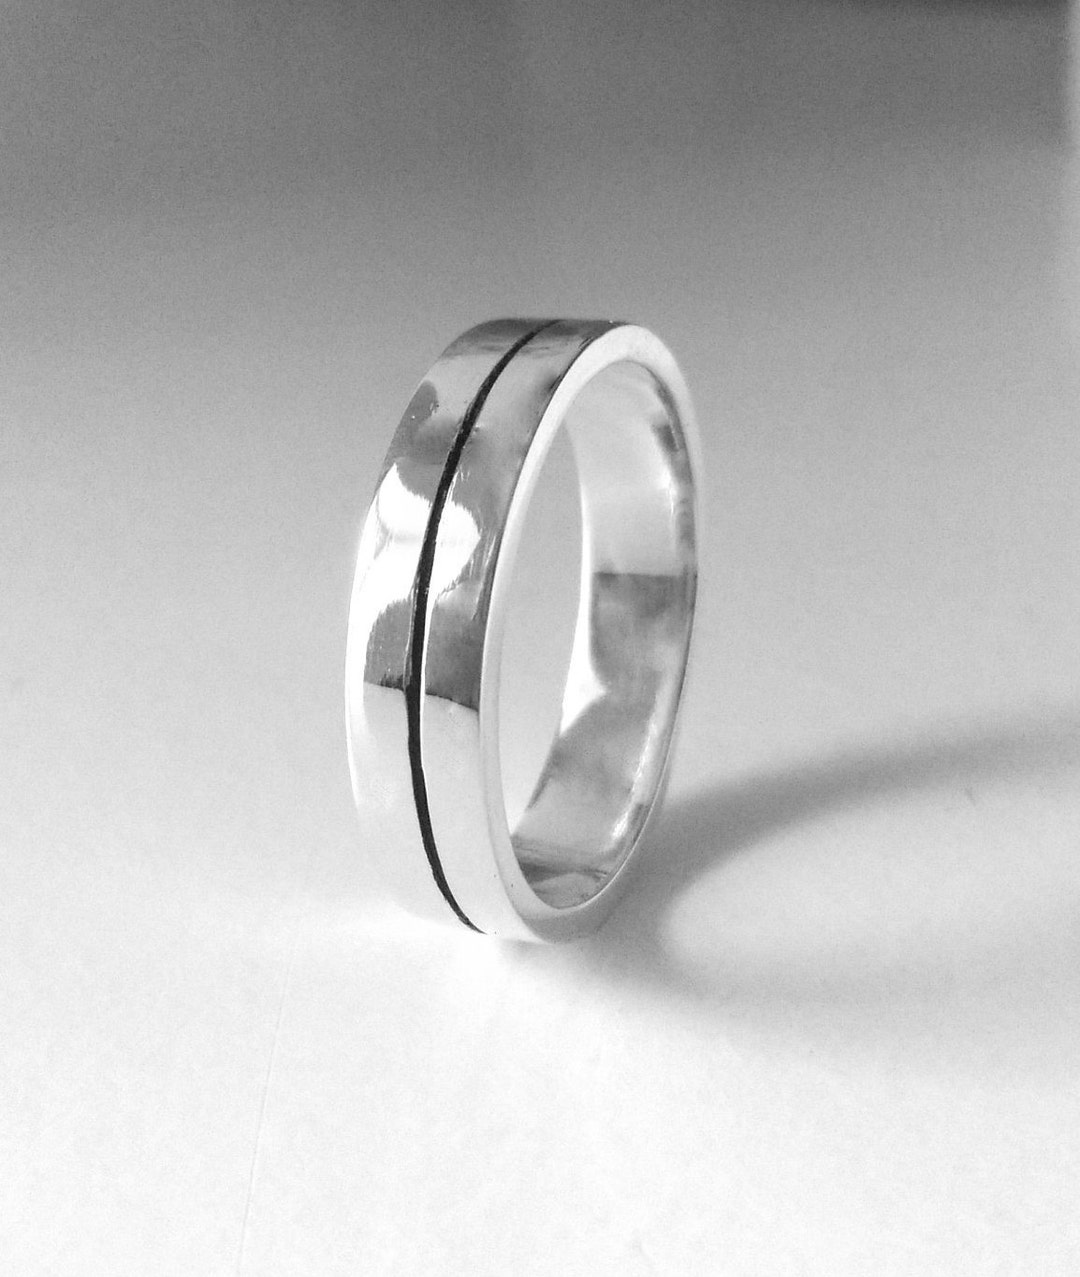 Infinity Ring in Sterling Silver with Diamonds, 13mm | David Yurman